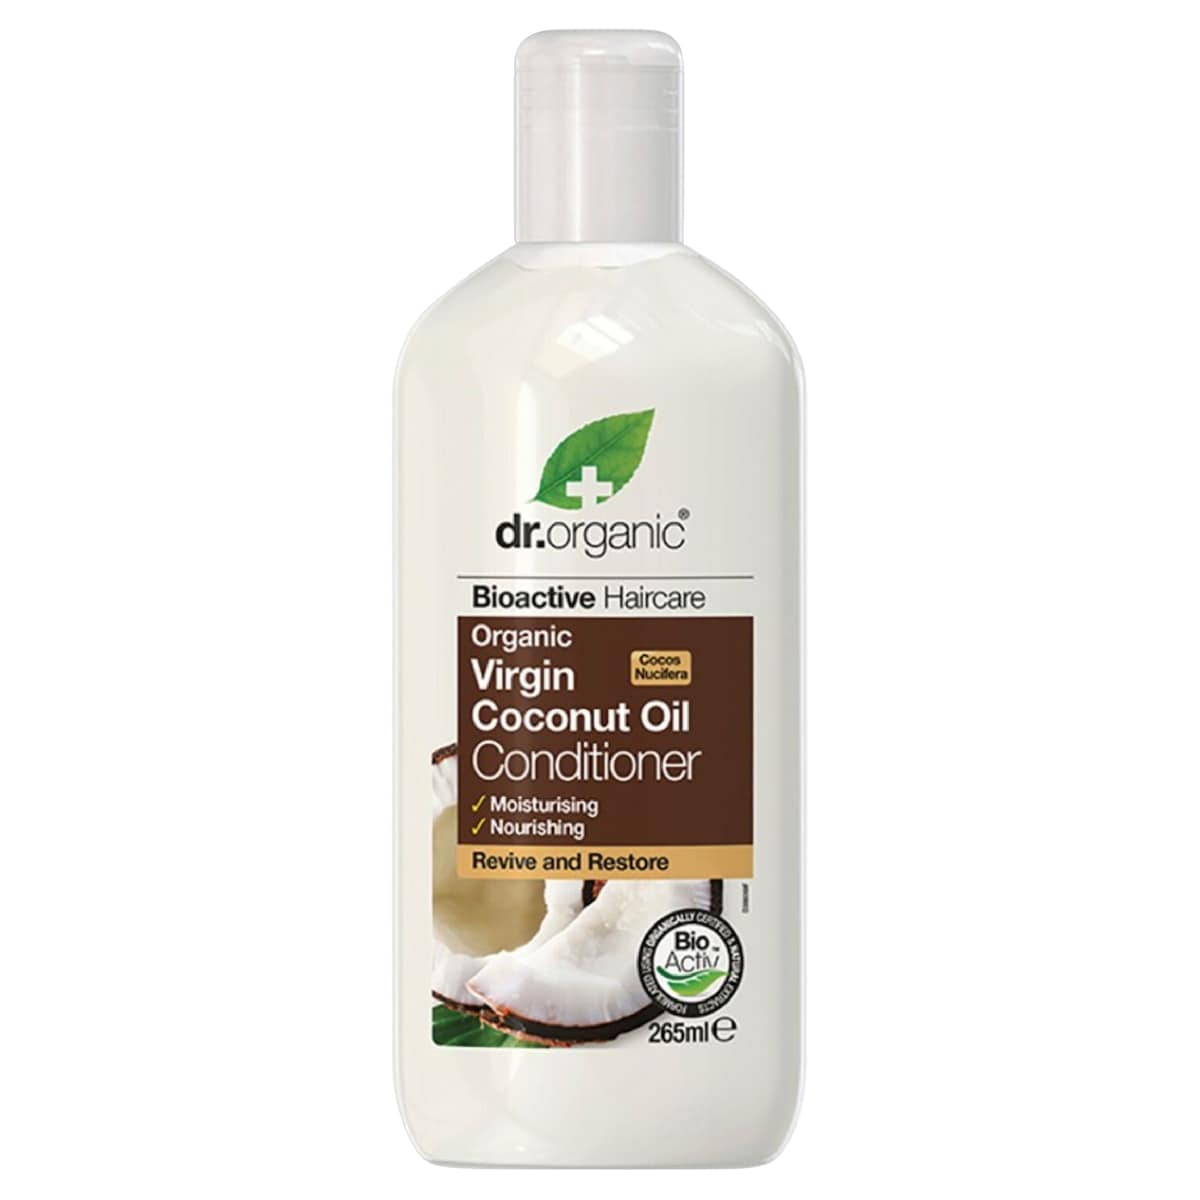 Dr Organic Organic Virgin Coconut Oil Conditioner 265ml